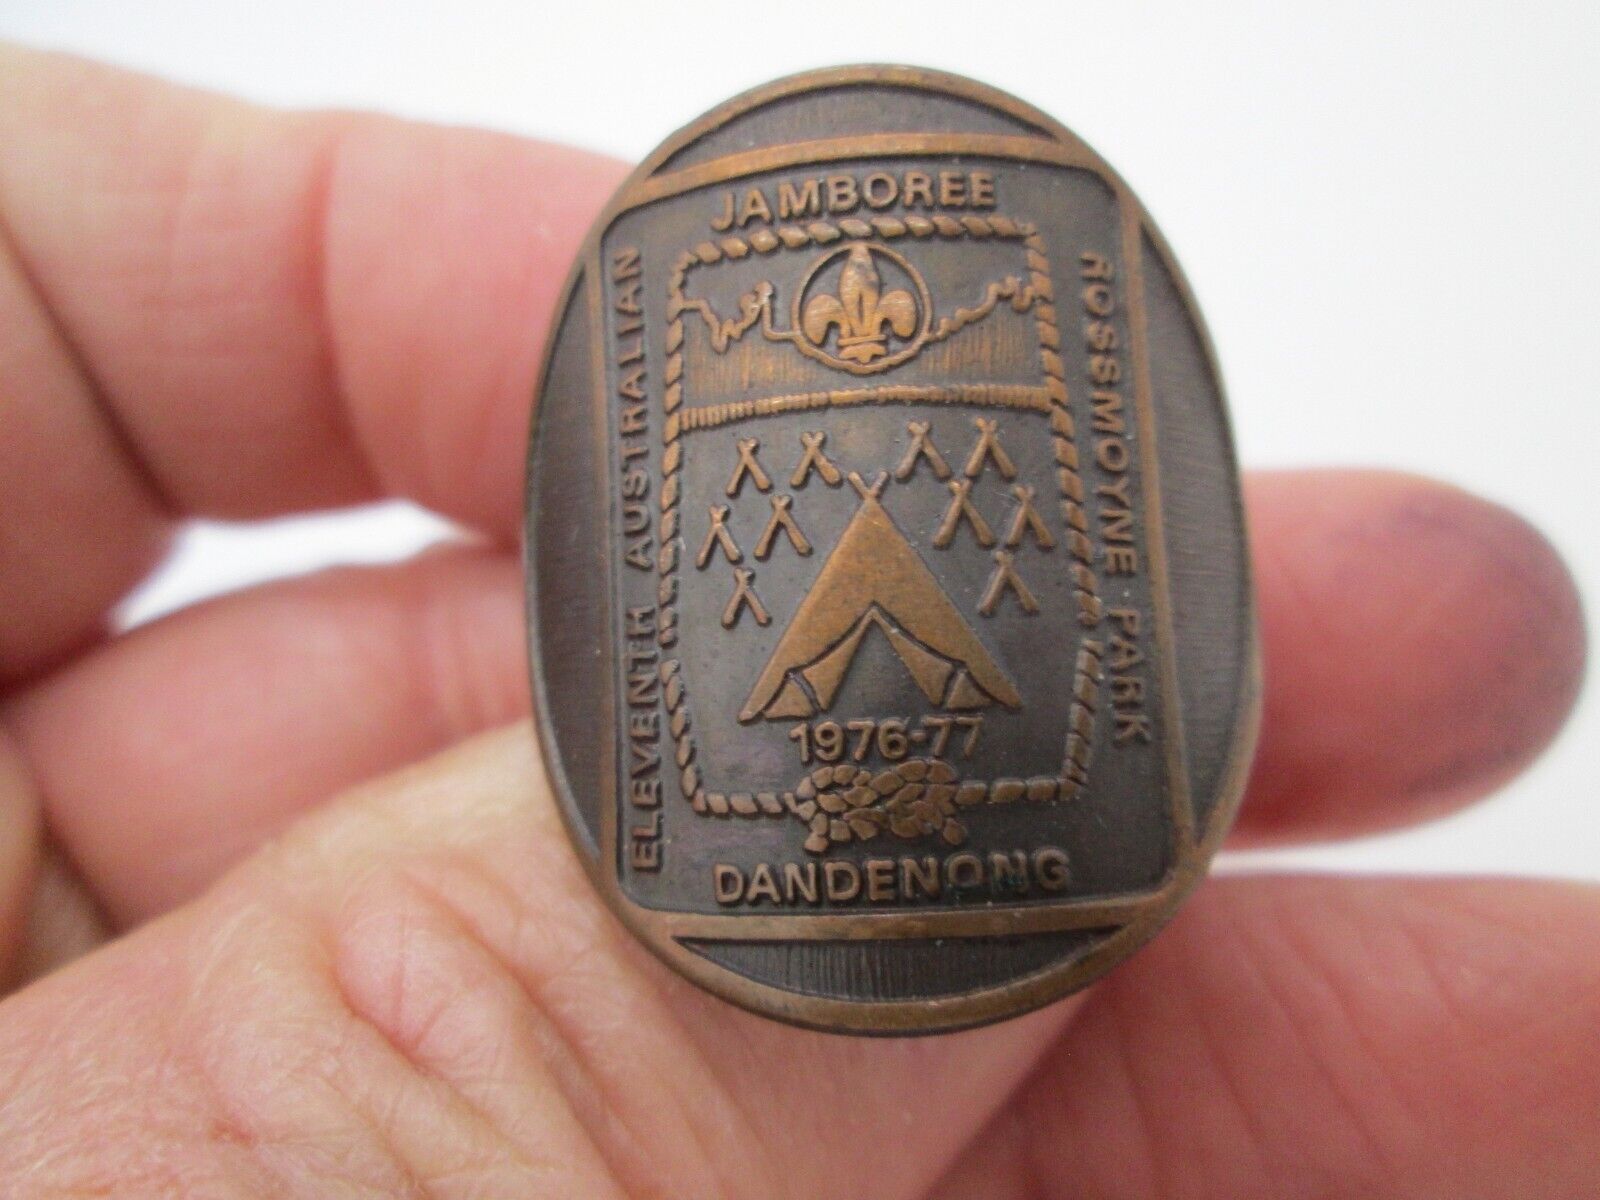 1976-77, Boy Scout, 11t Australian Jamboree Rossmoyne Park Dandenong Copper Ring